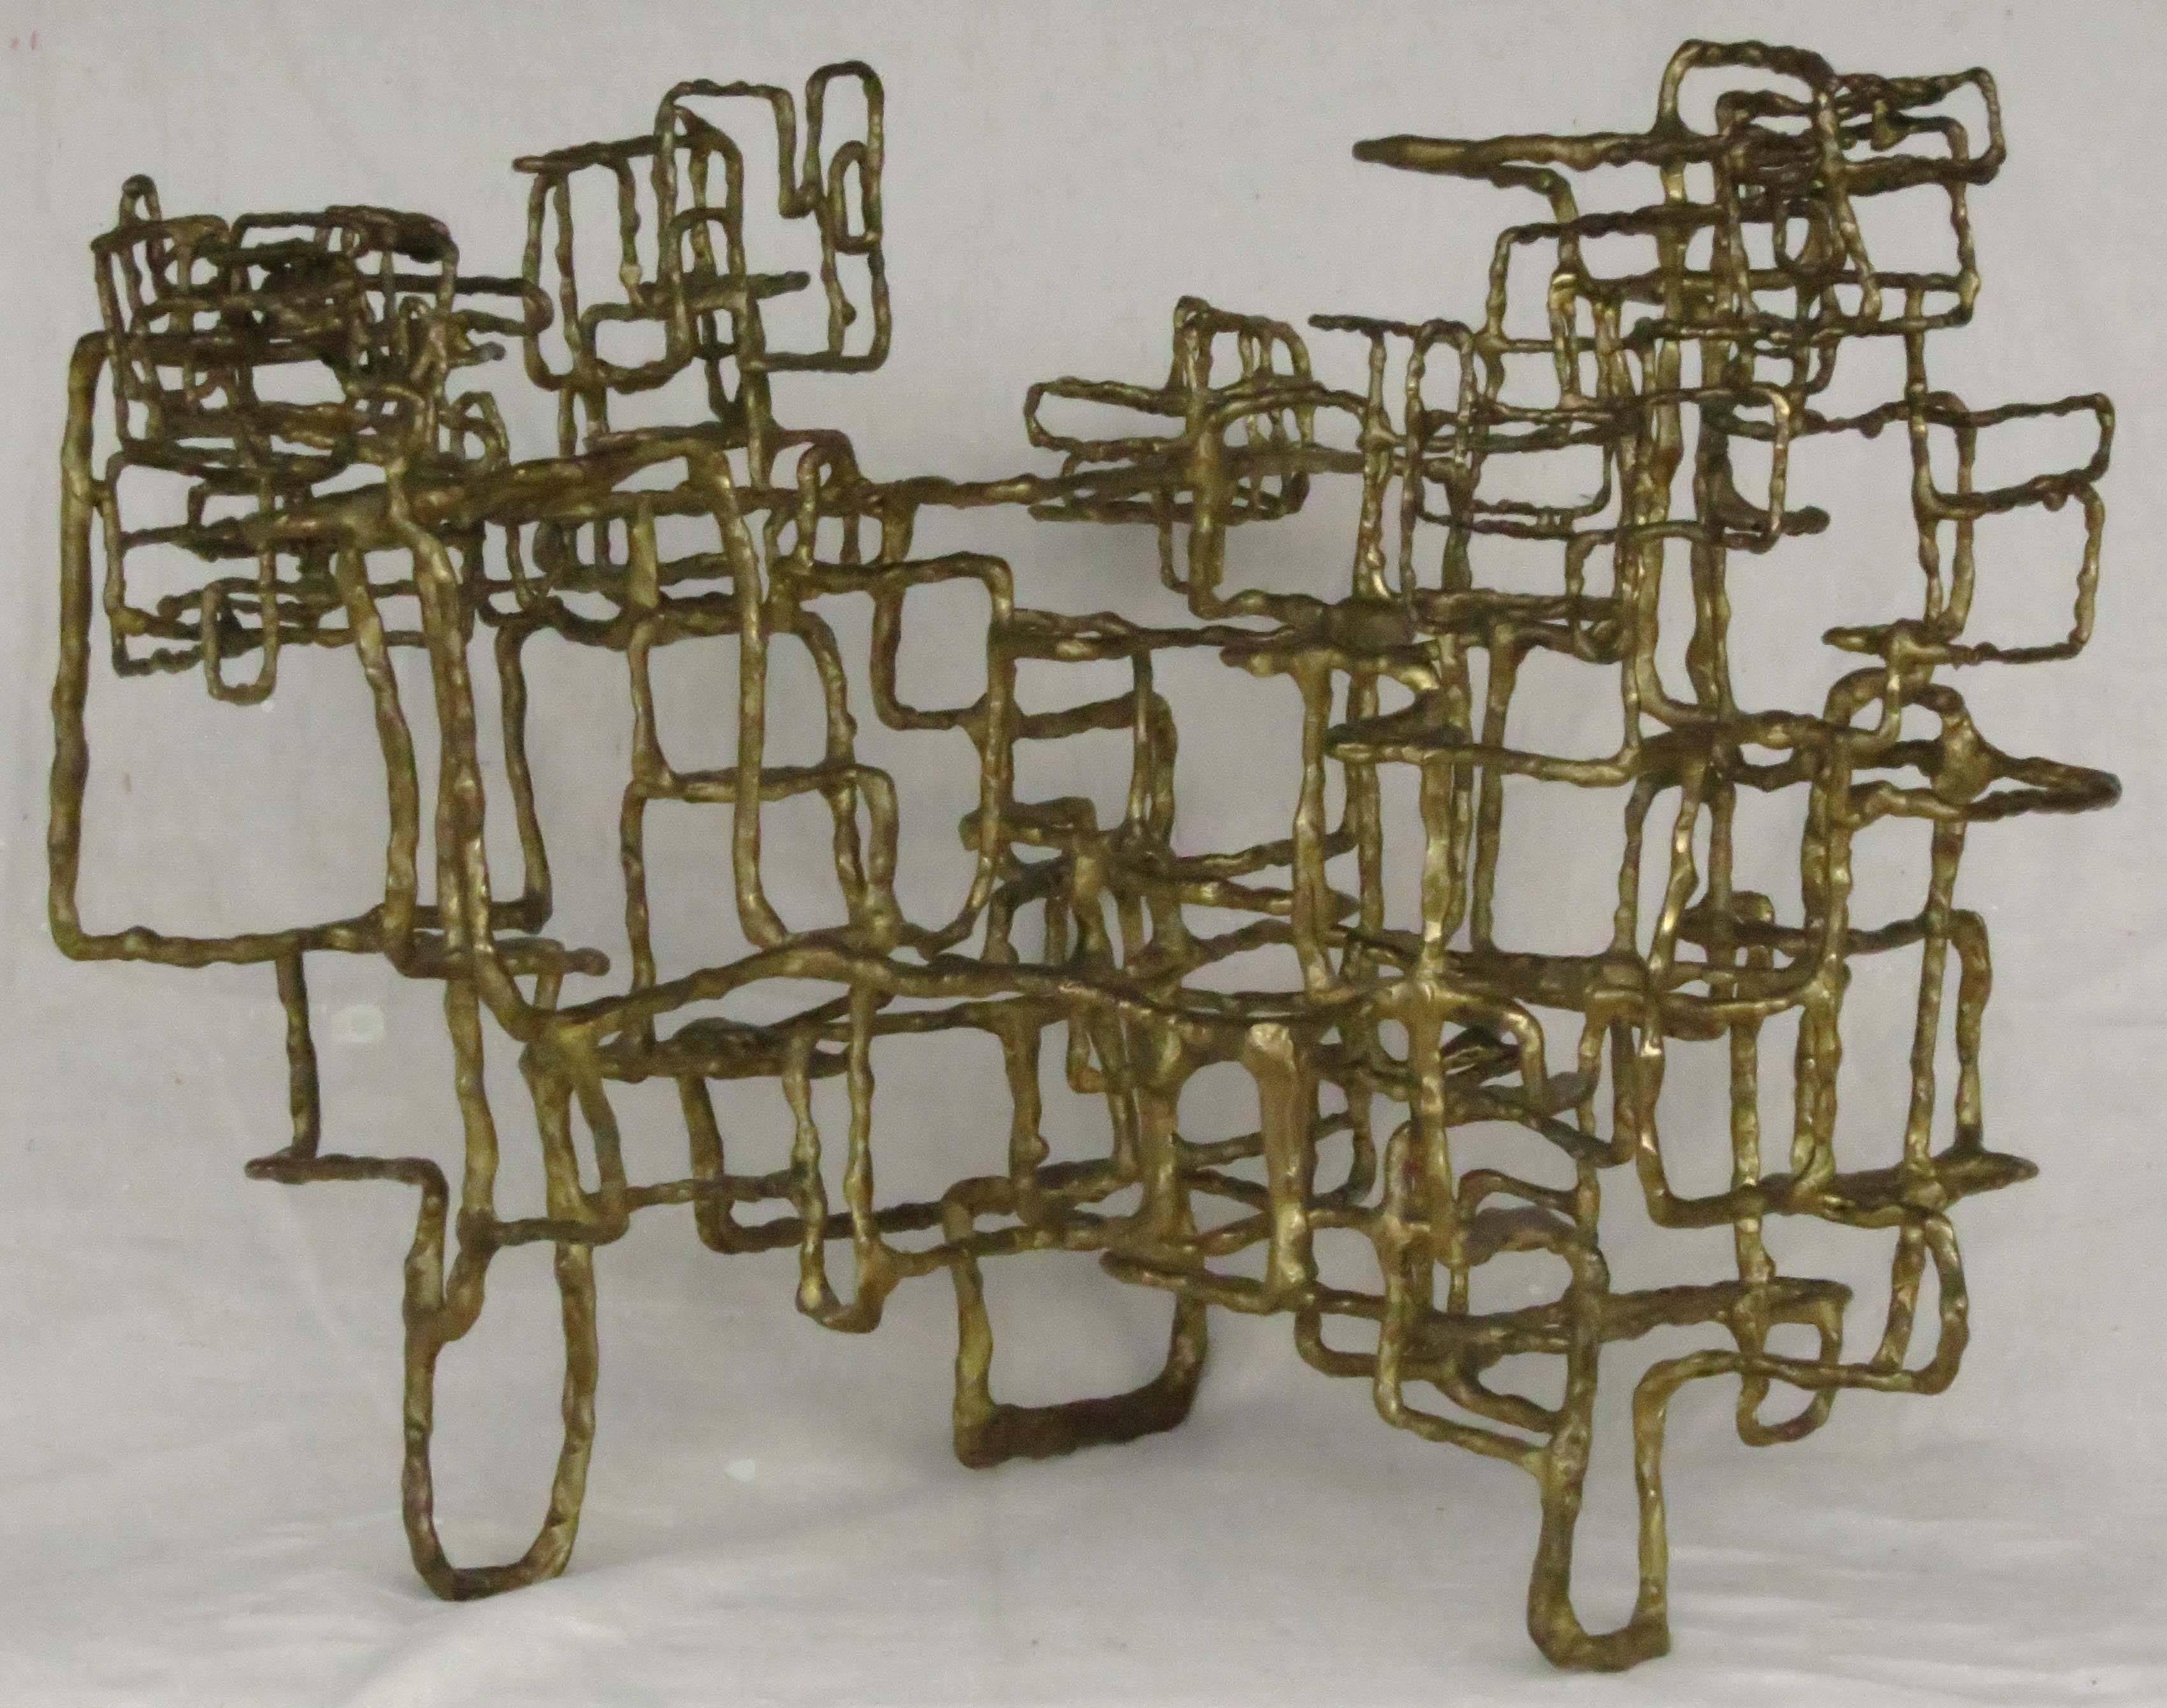 Ibram Lassaw Abstract Sculpture - "Loom III"